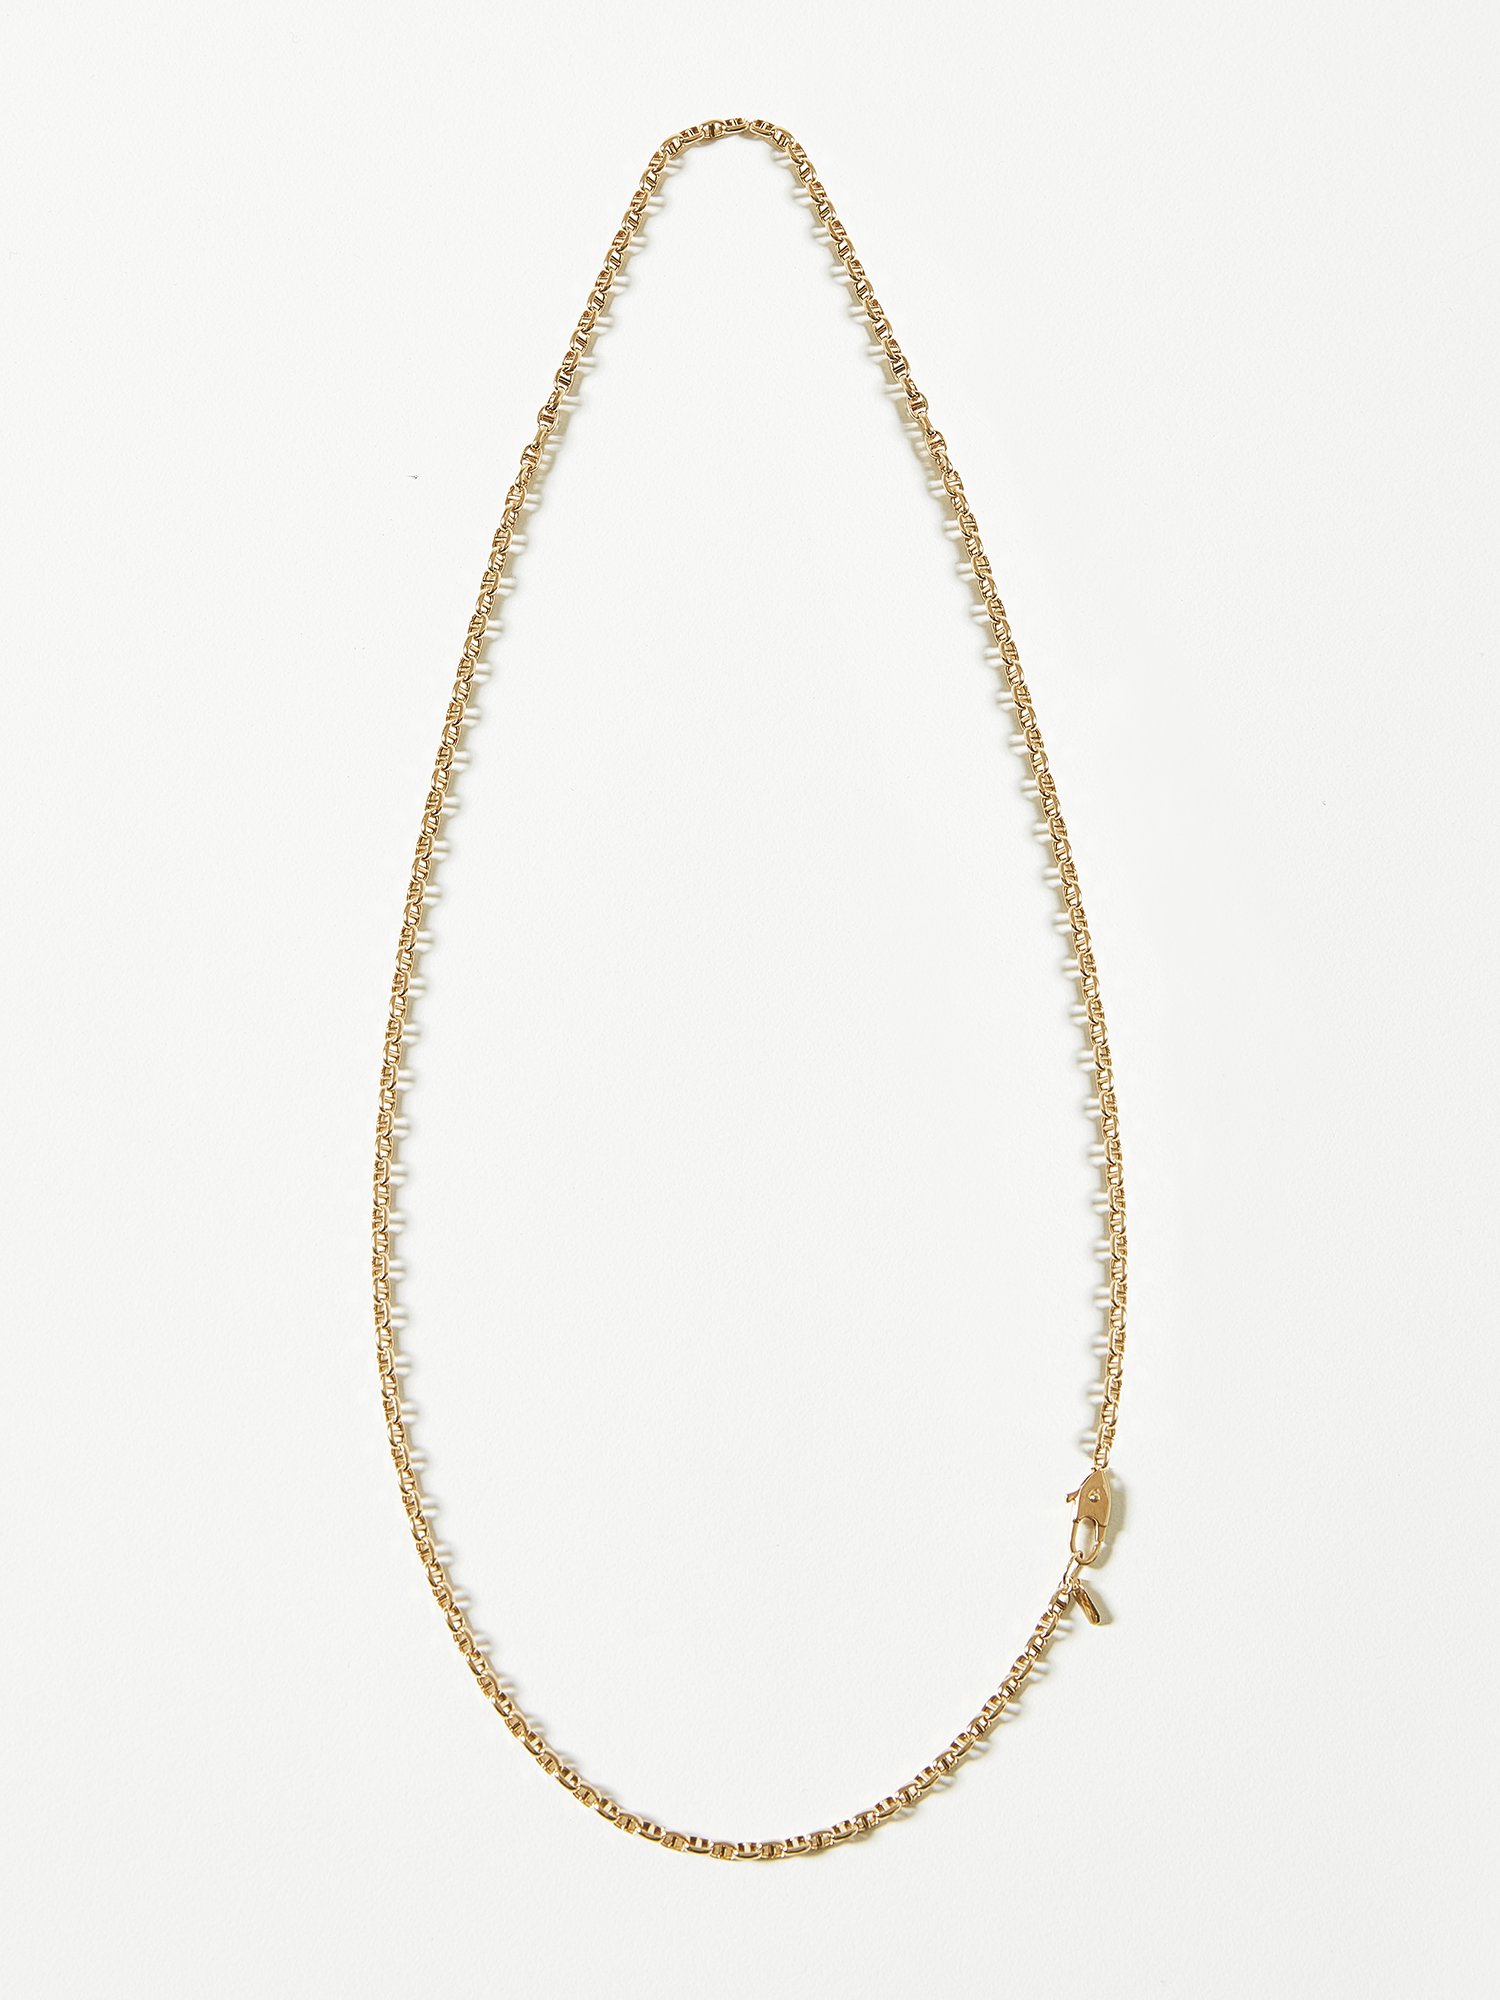 ALCHYMIA / Anchor chain necklace
